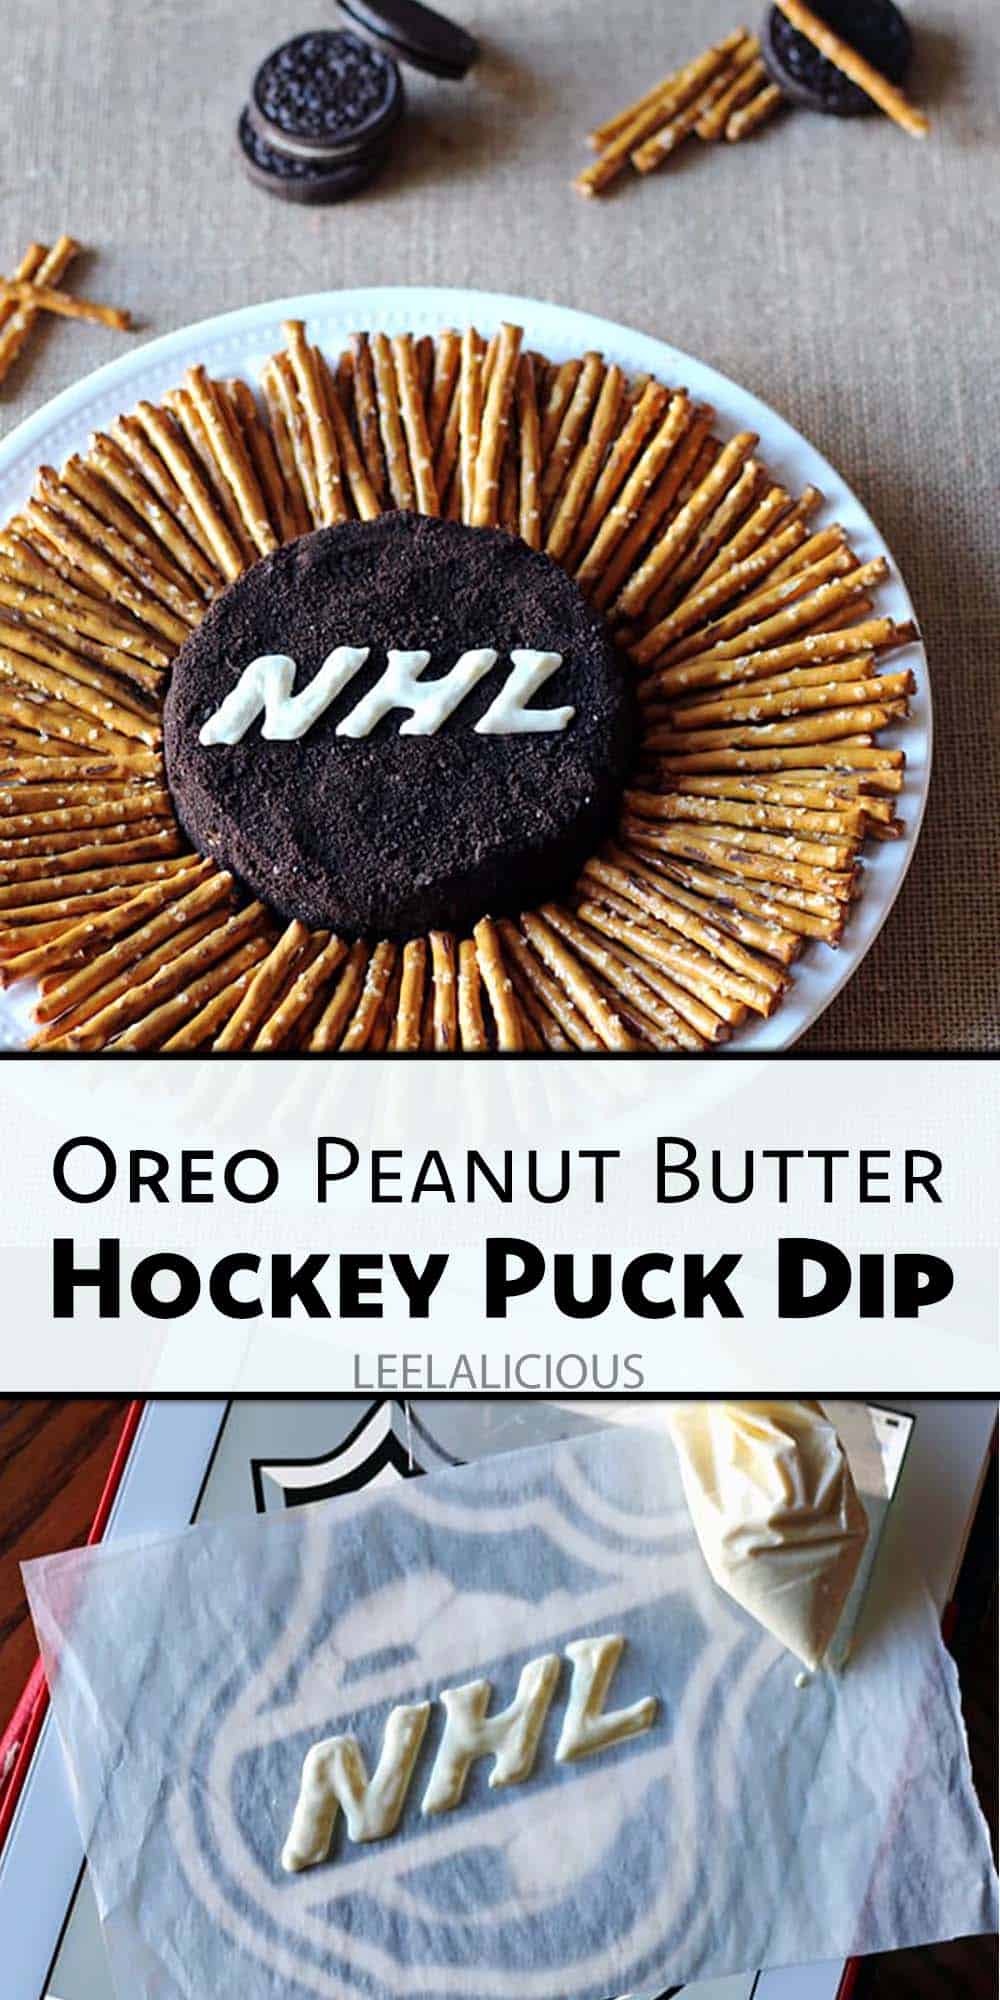 Oreo Peanut Butter Hockey Puck Dip